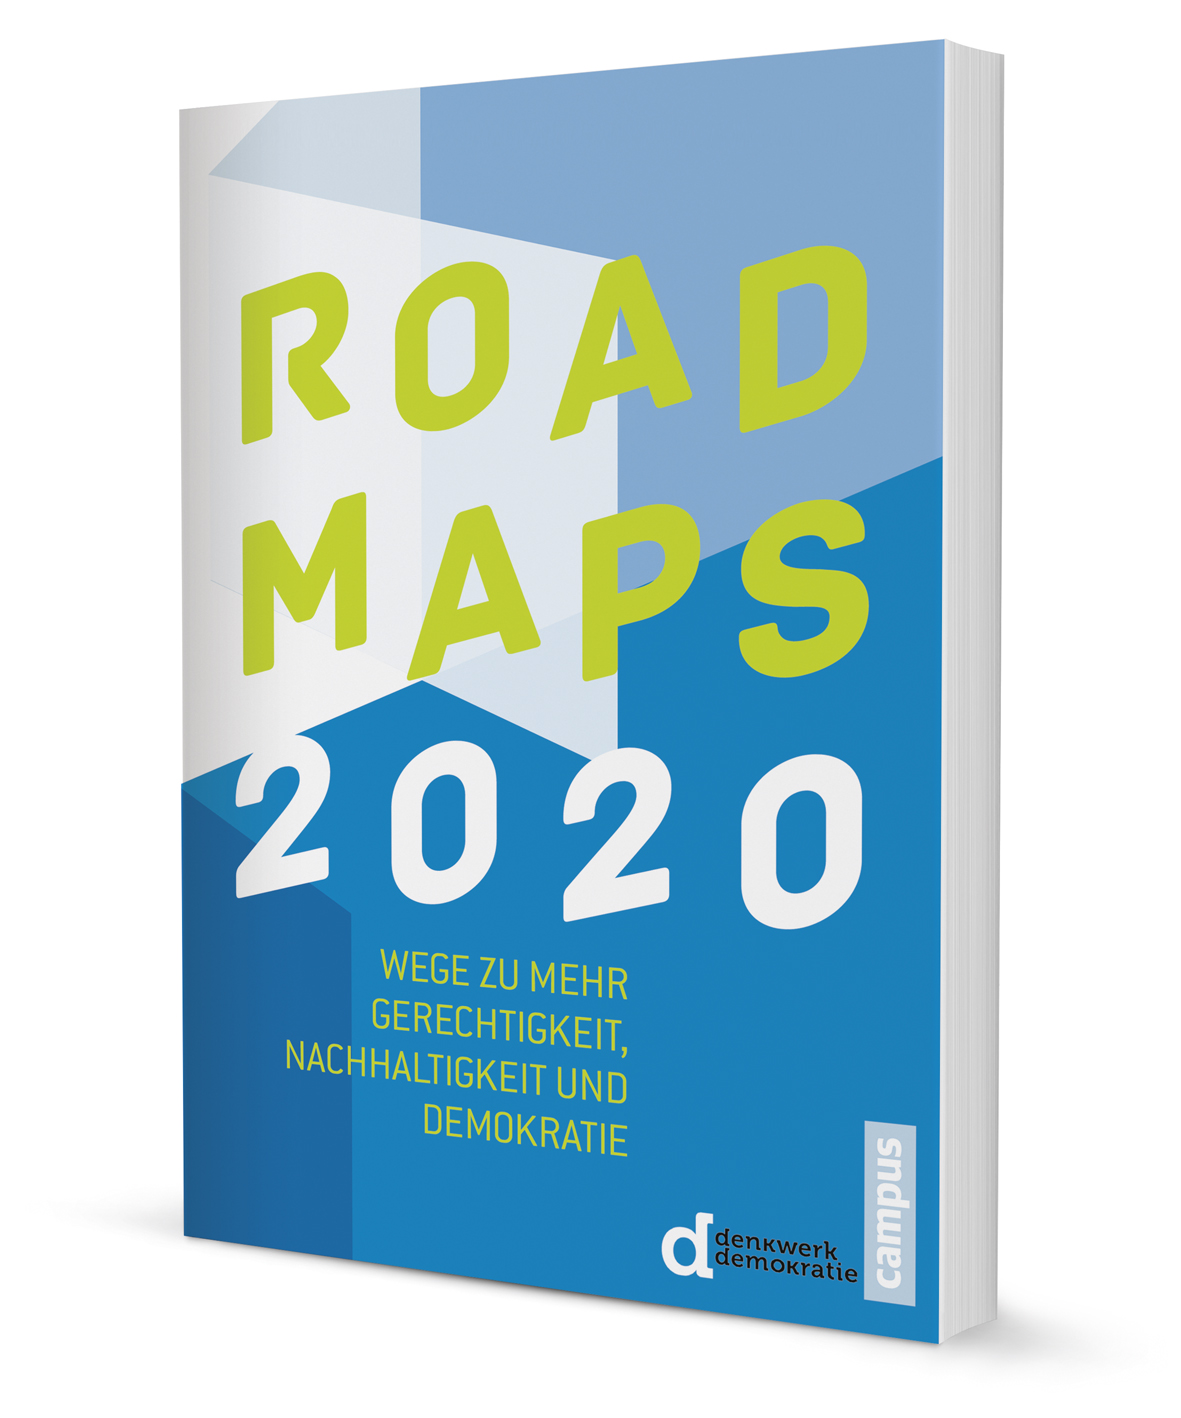 Roadmaps 2020